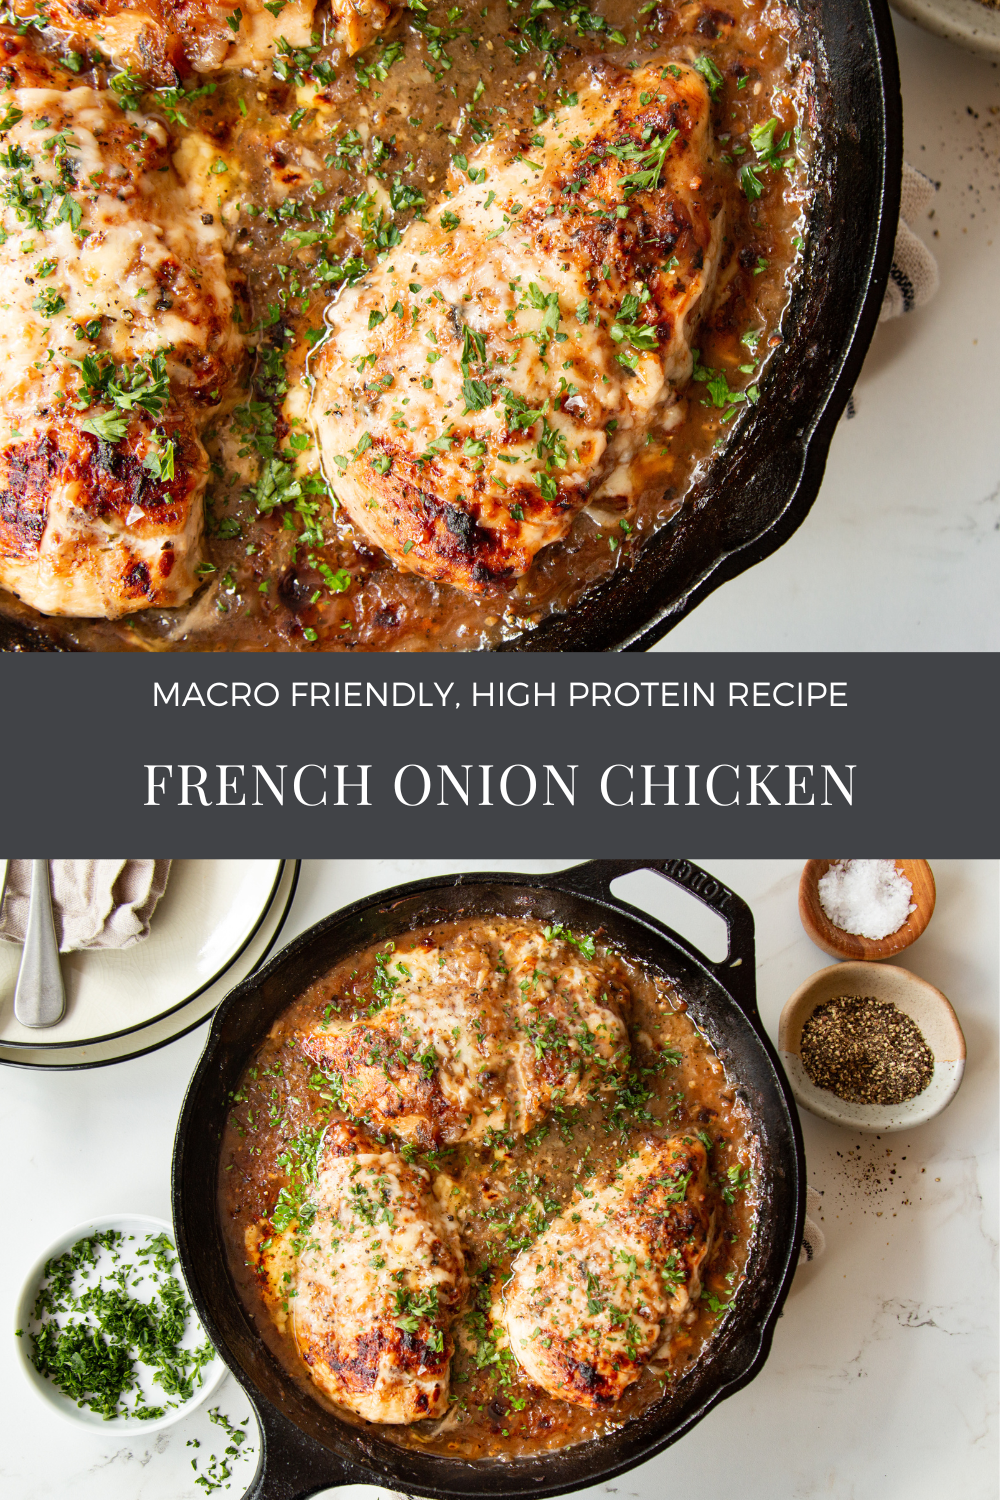 French Onion Chicken Recipe